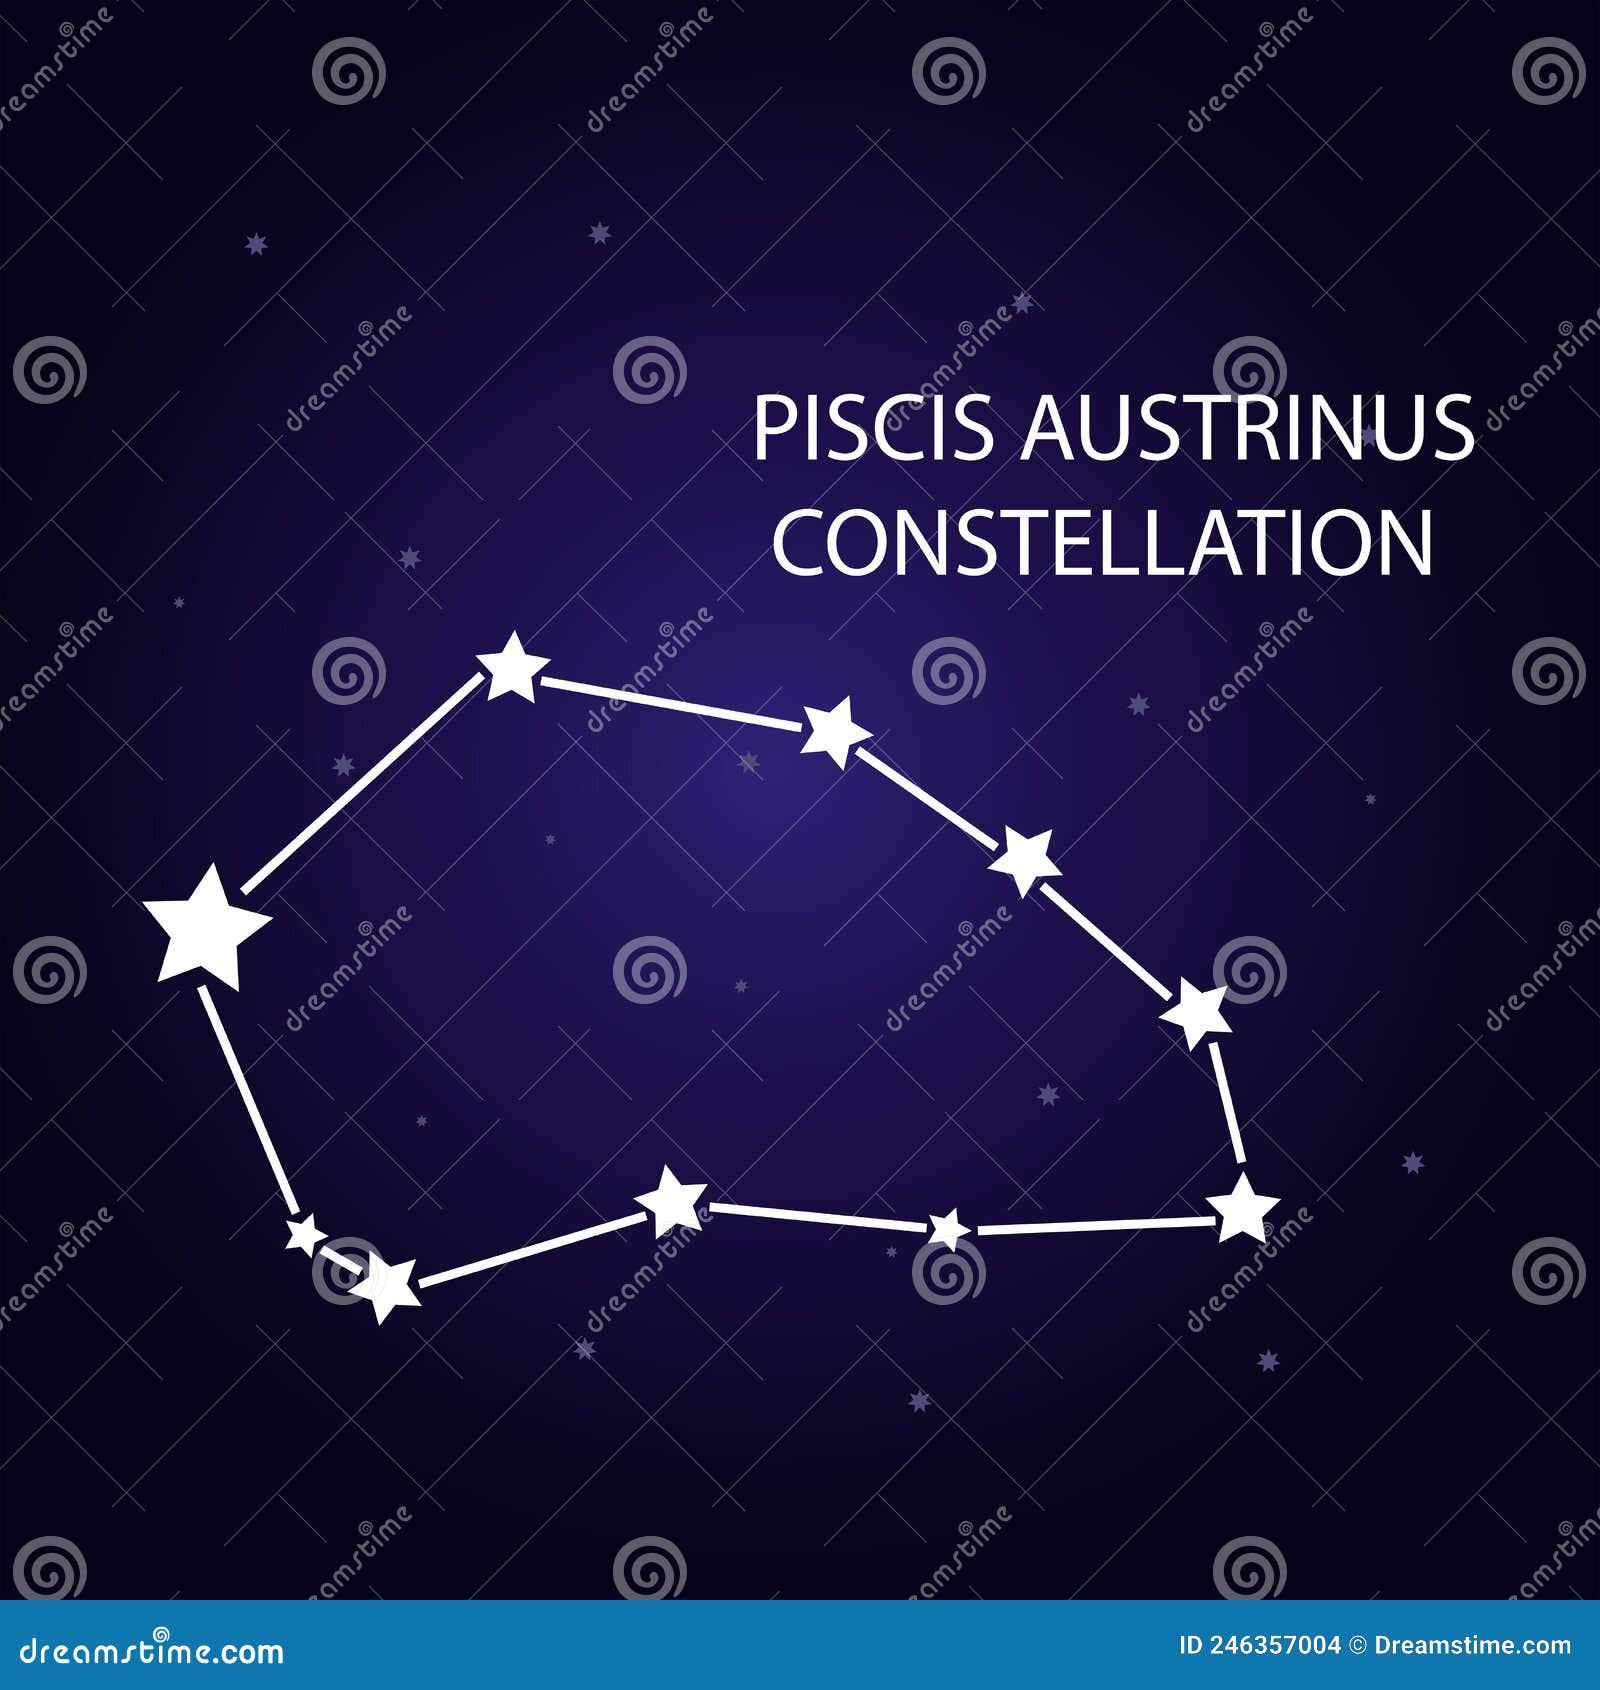 the constellation of piscis austrinus with bright stars.